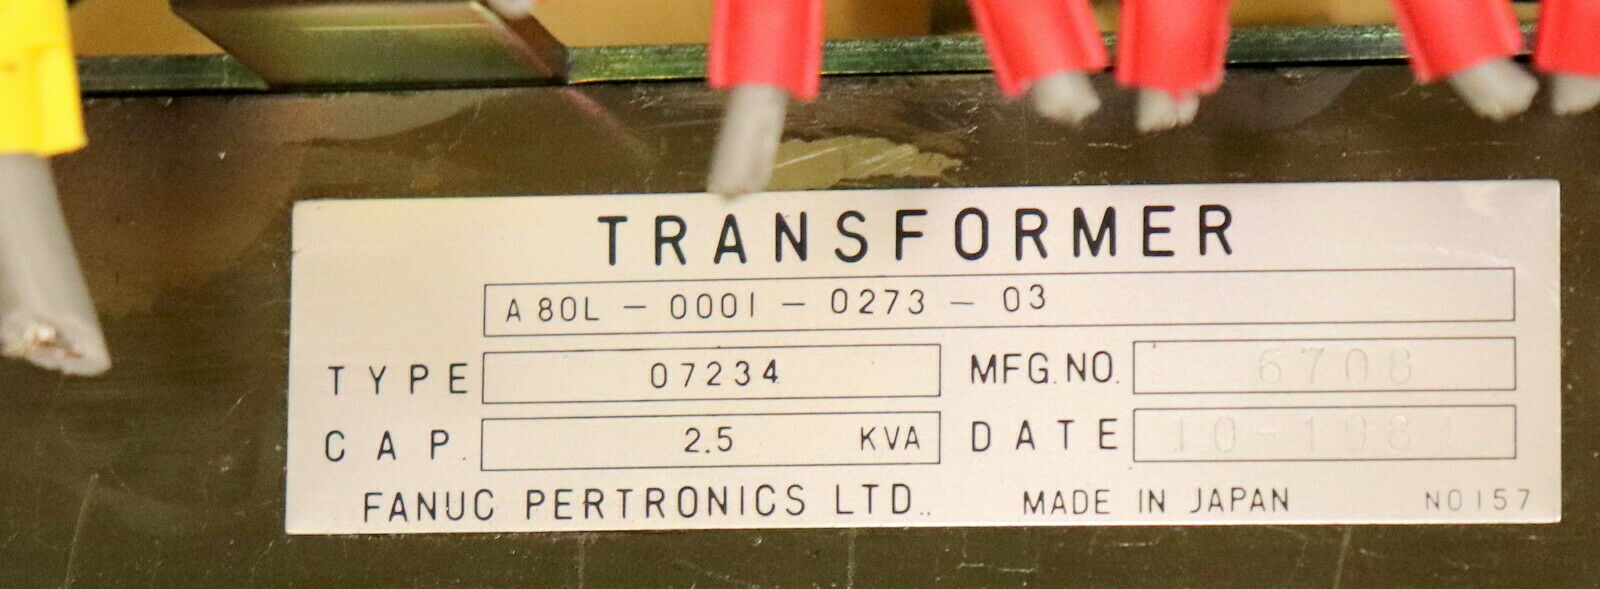 FANUC Transformator transformer A80L-0001-342-03 cap. 2.5kVA type 07234